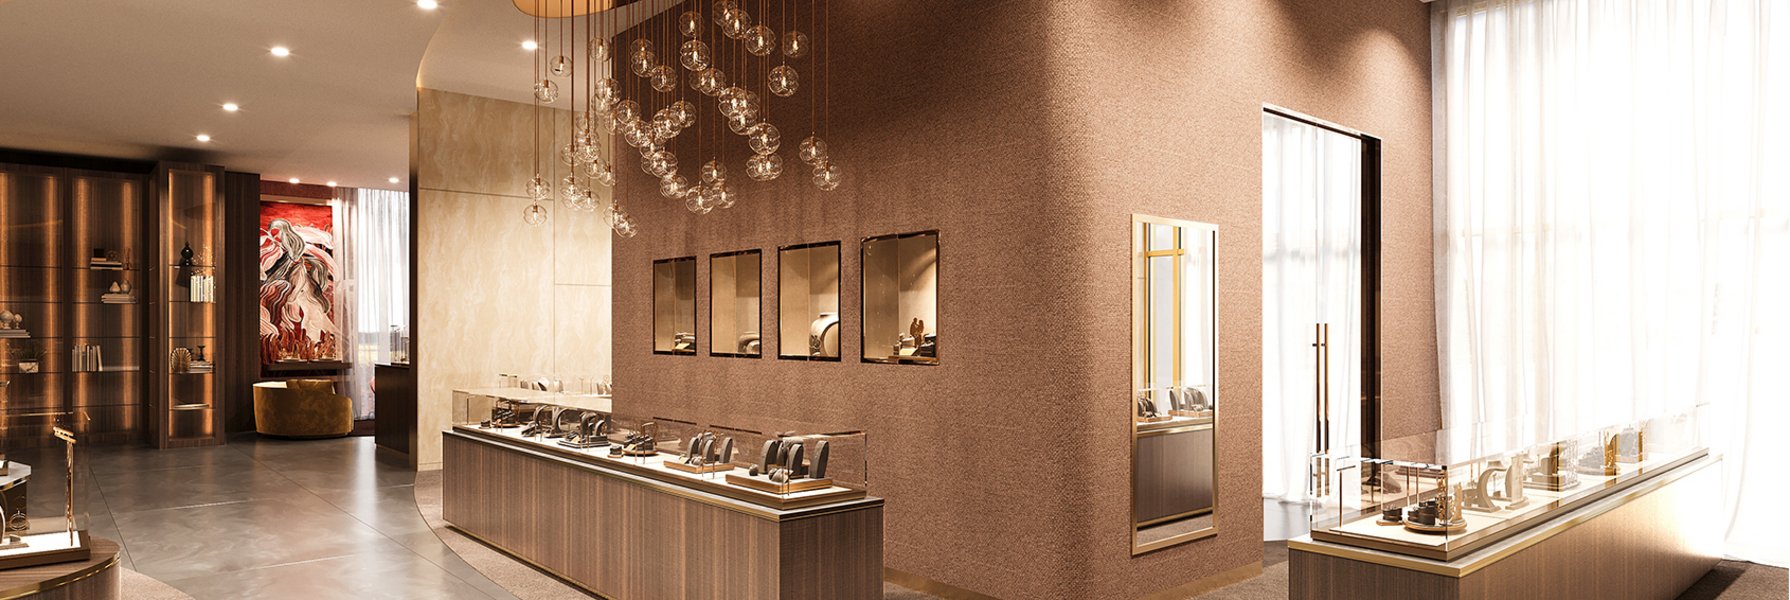 Studio Tonic-Jewelery Store Design Project-Texas